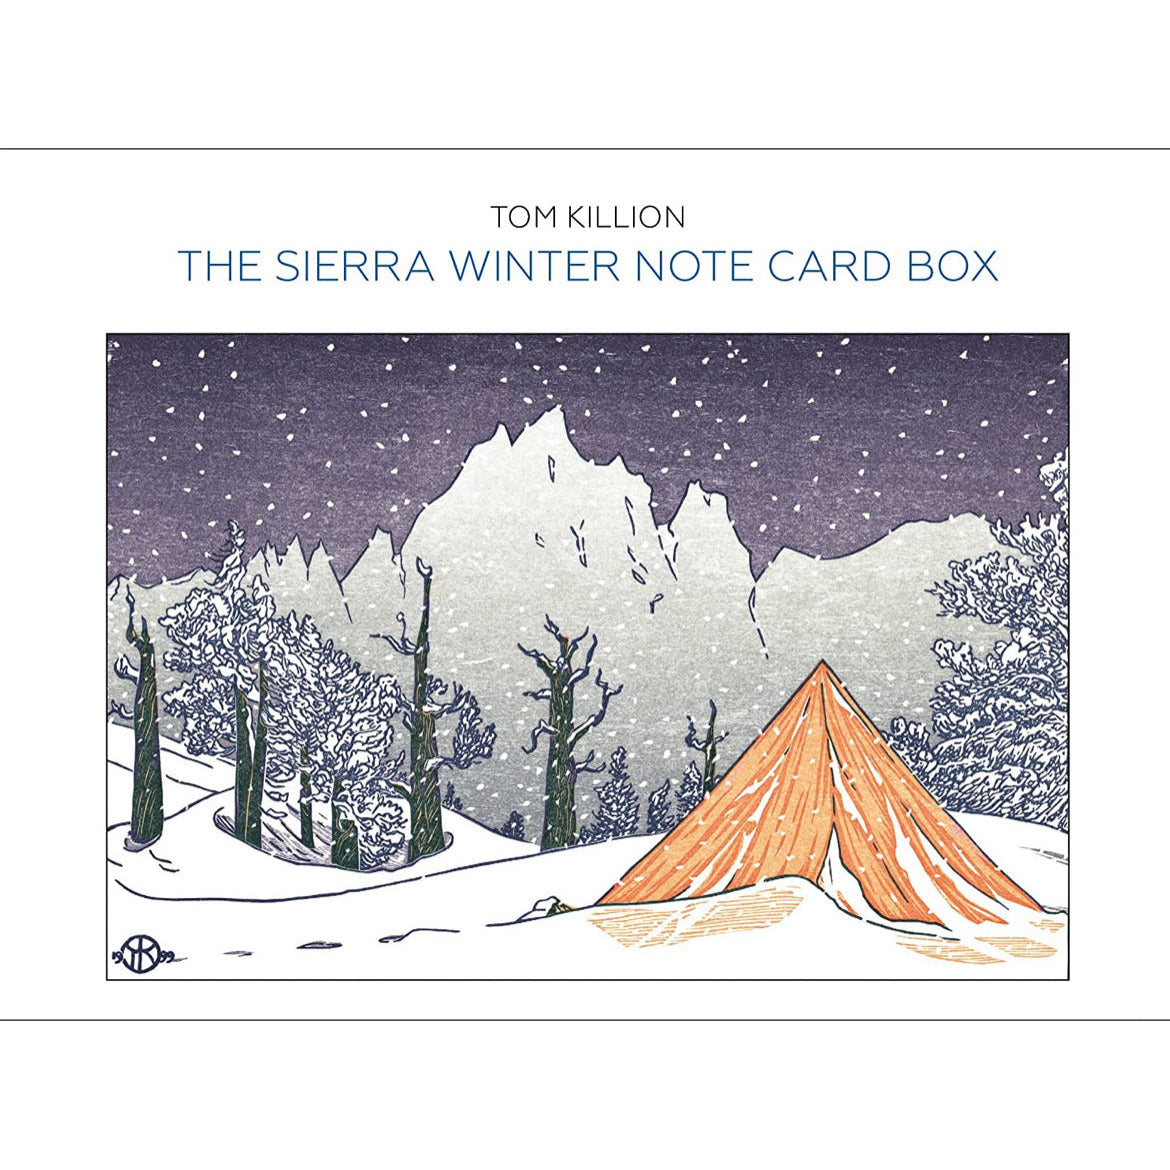 The Sierra Winter Note Card Box by Tom Killion